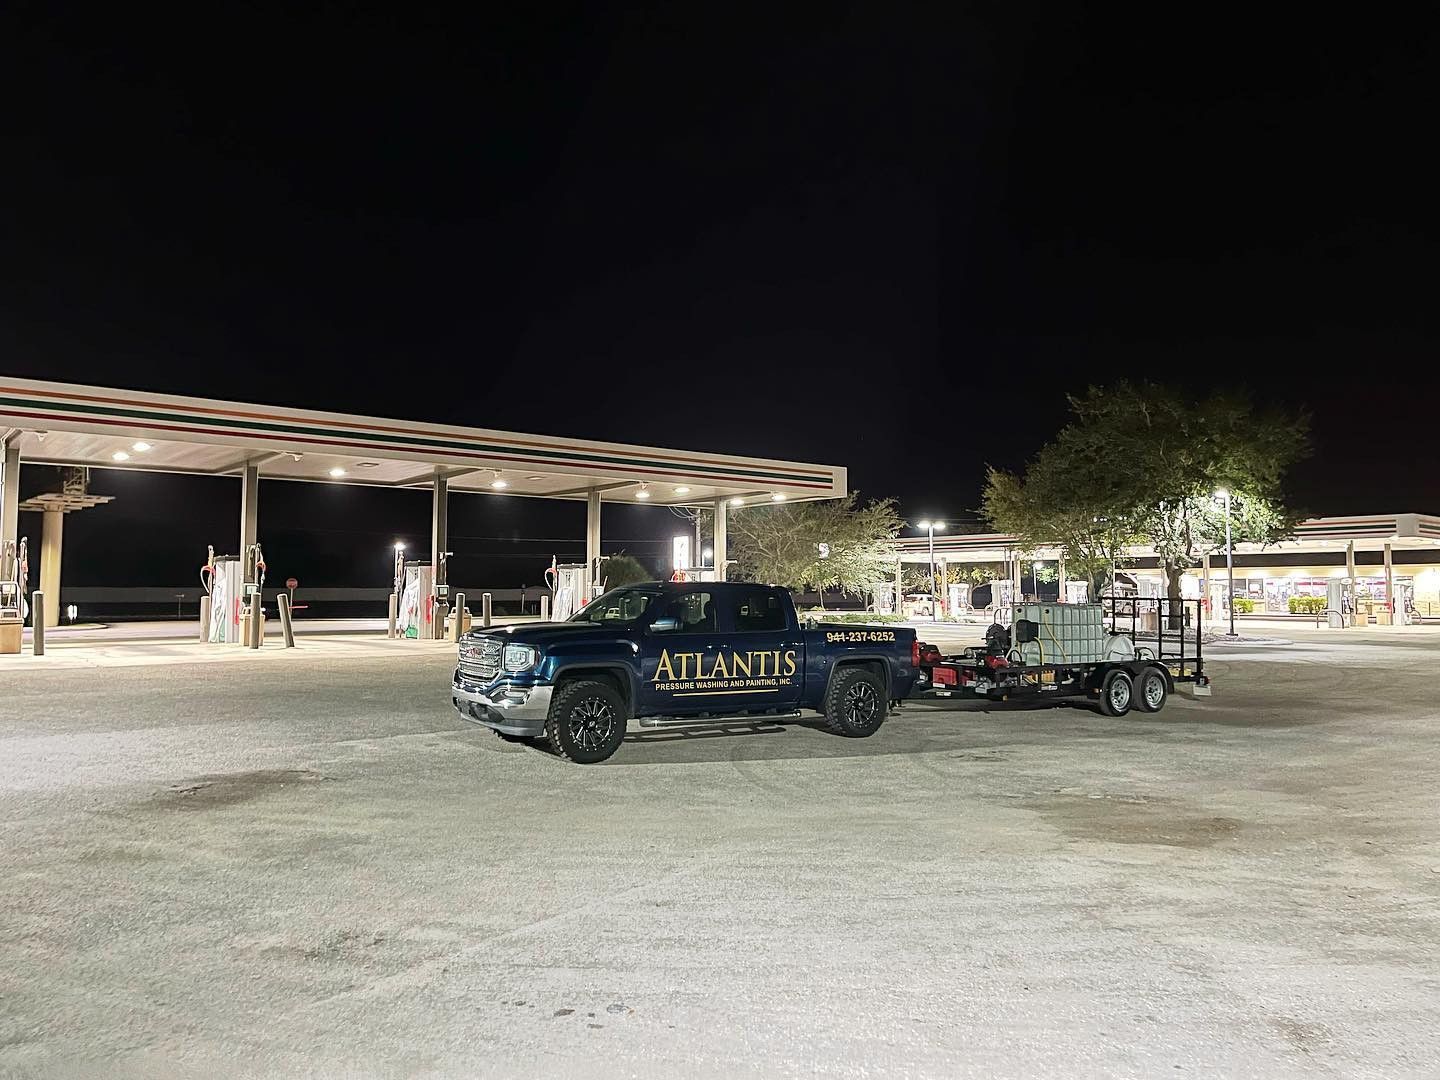 Atlantis serving gas station